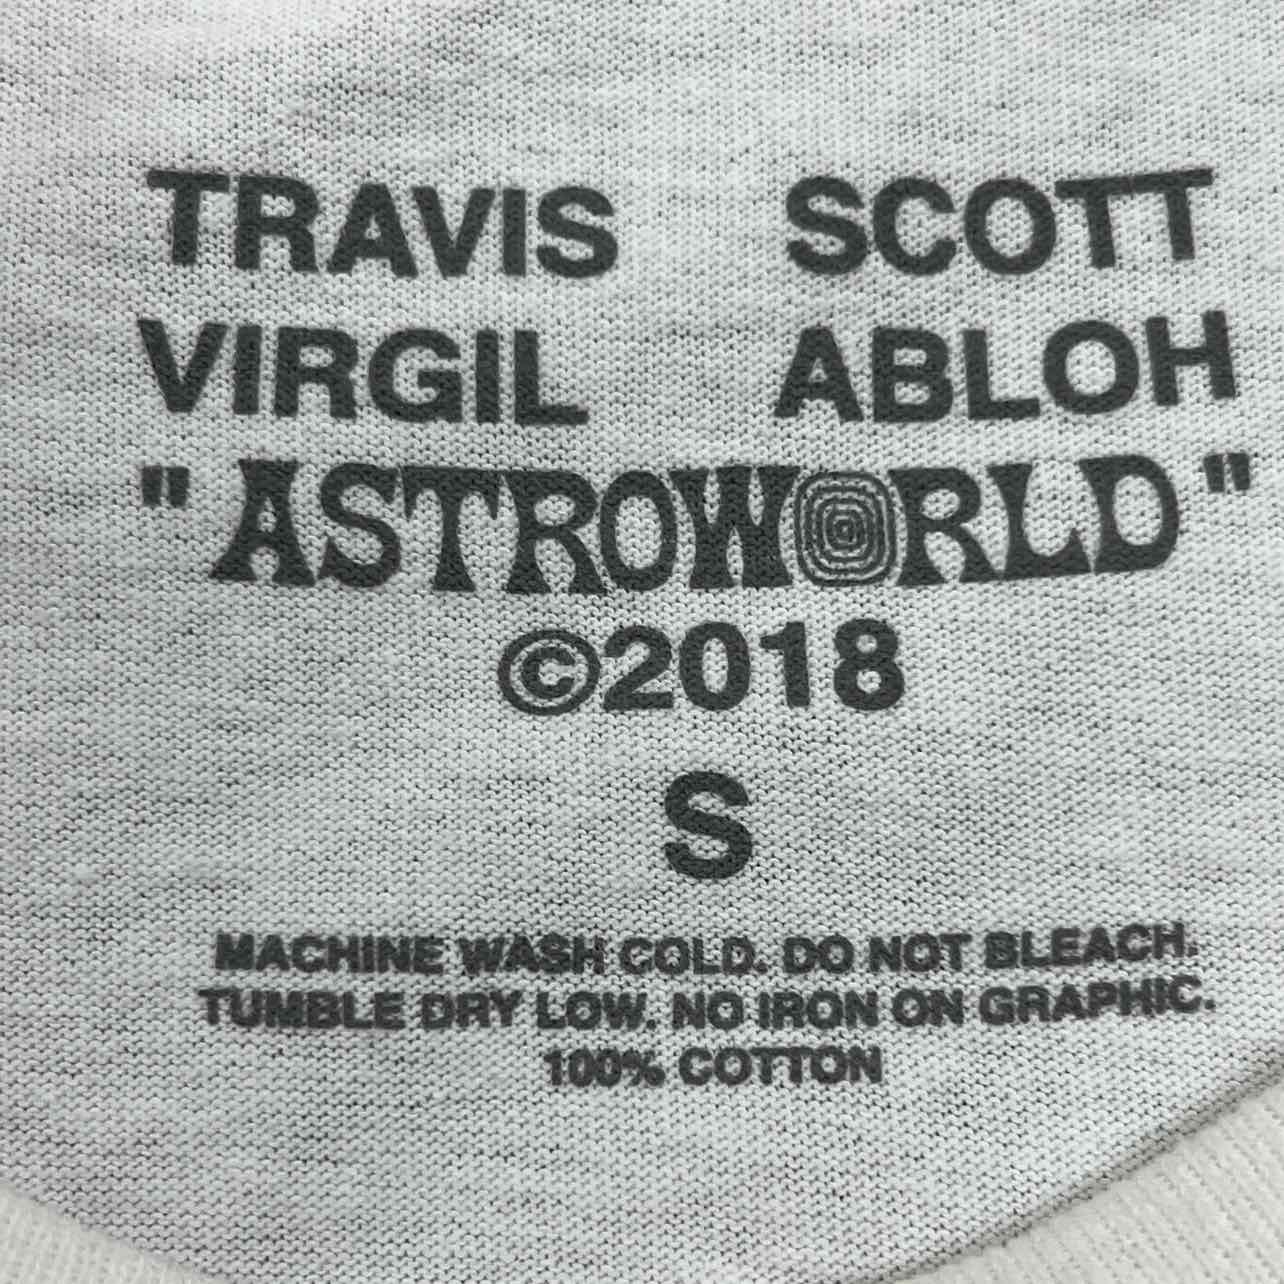 Travis Scott T-Shirt "VIRGIL ABLOH" Used Size S